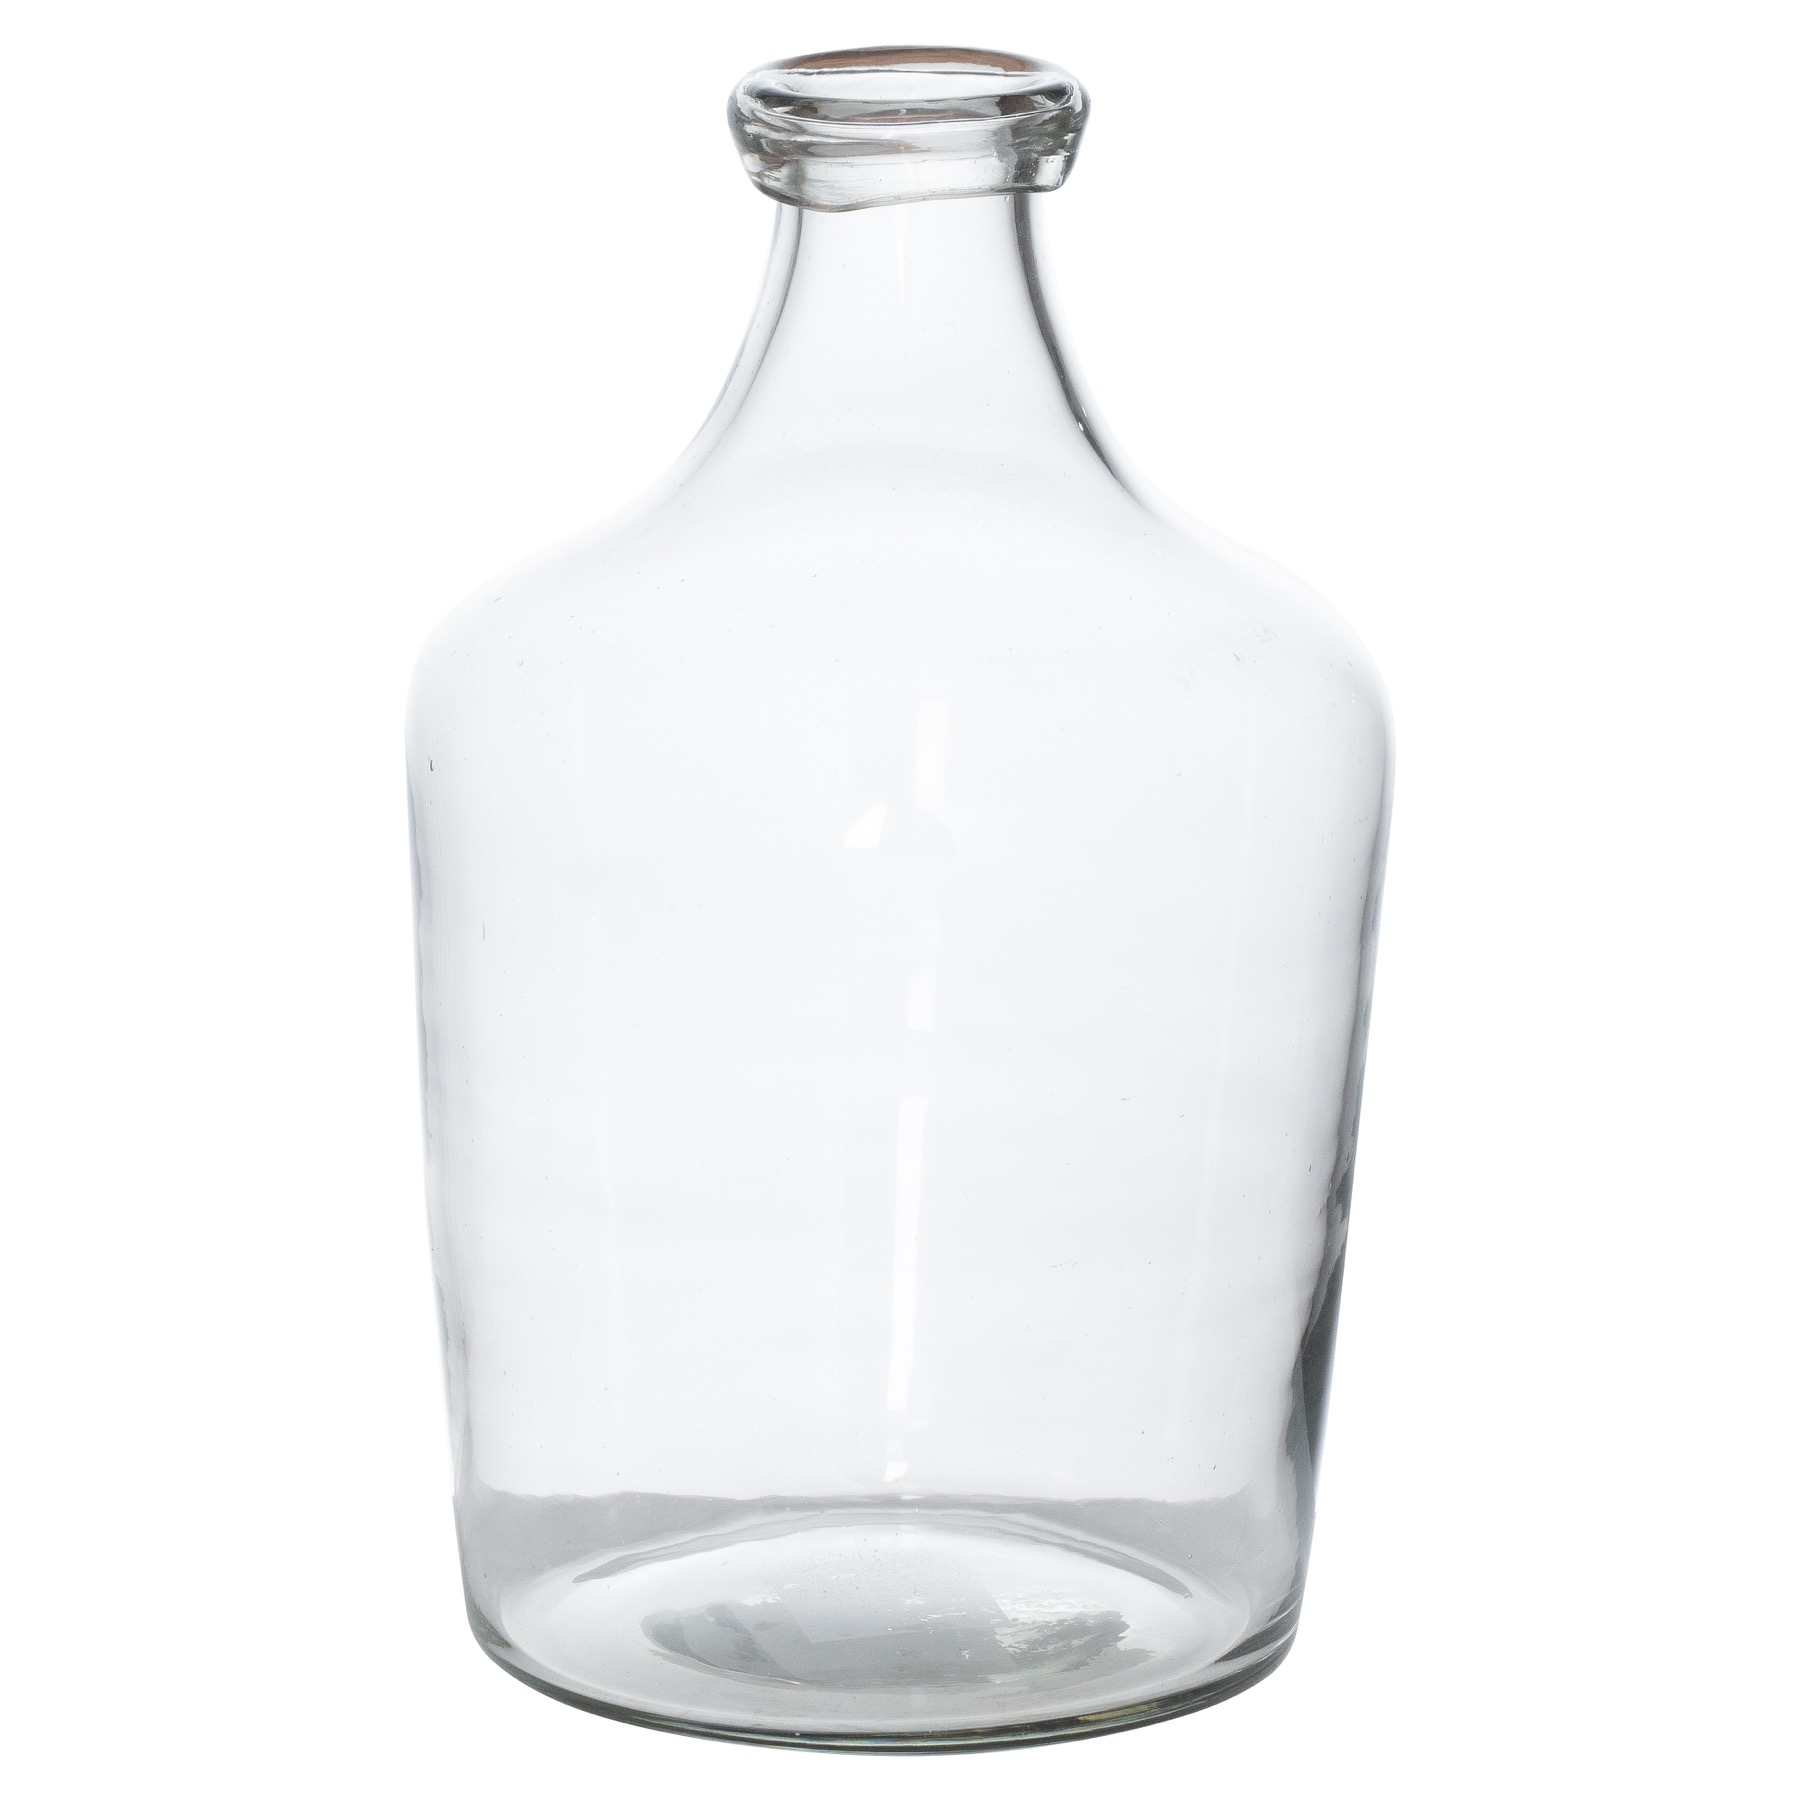 Bulbous Narrow Neck Glass Vase - Image 1